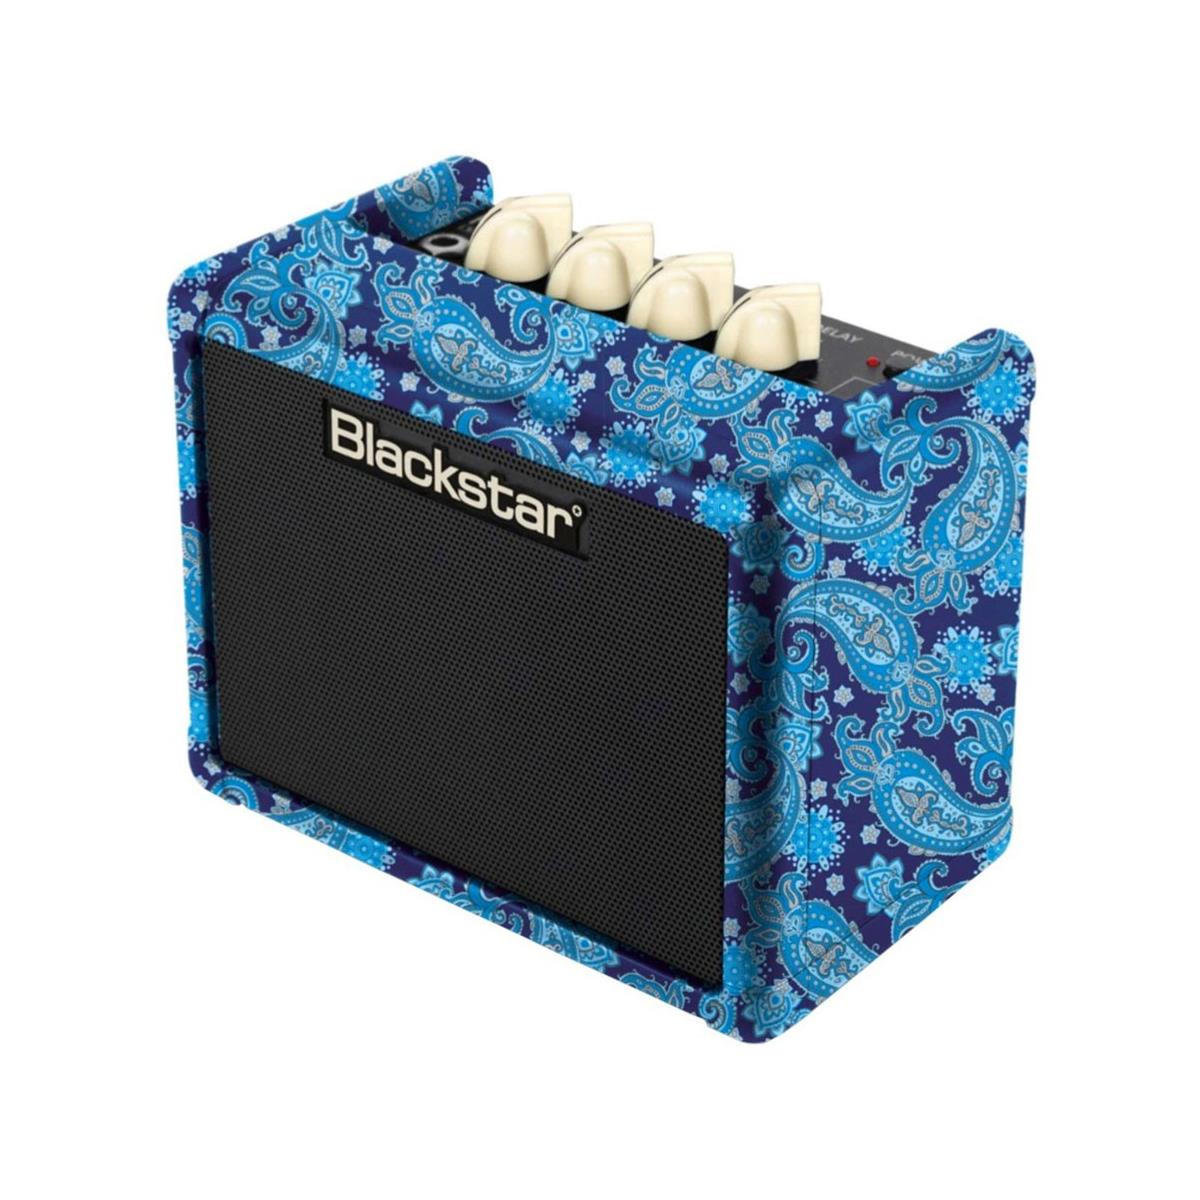 Blackstar FLY 3 3W Battery Powered Mini Guitar Amplifier, Purple Paisley